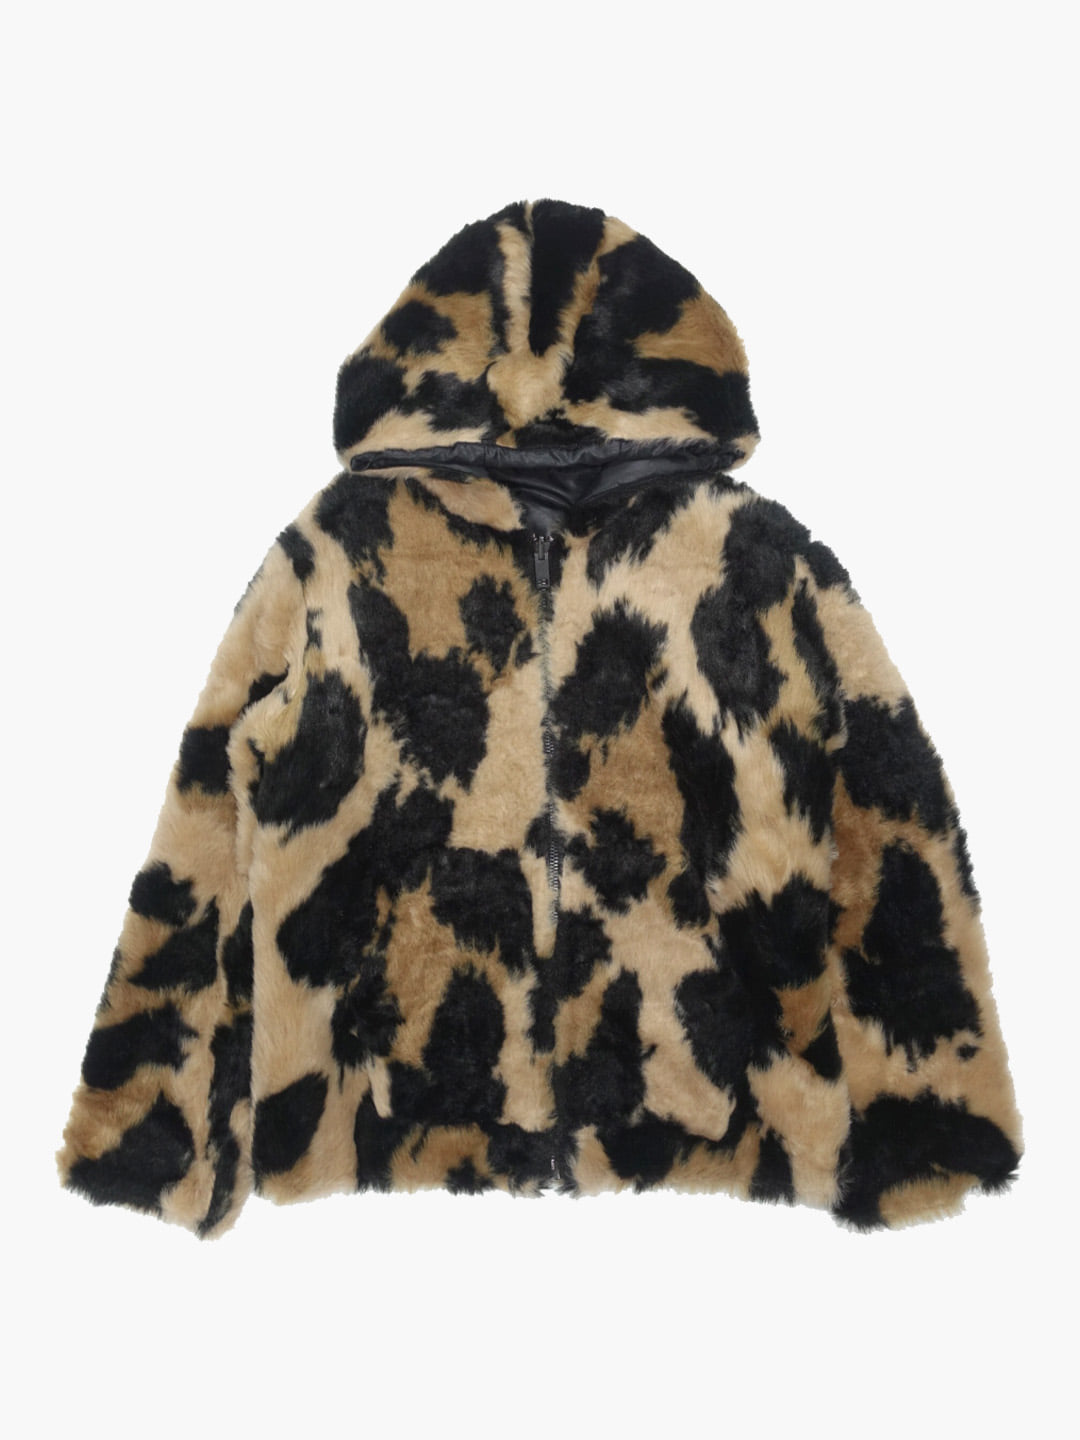 DIESELReversible faux fur jacket